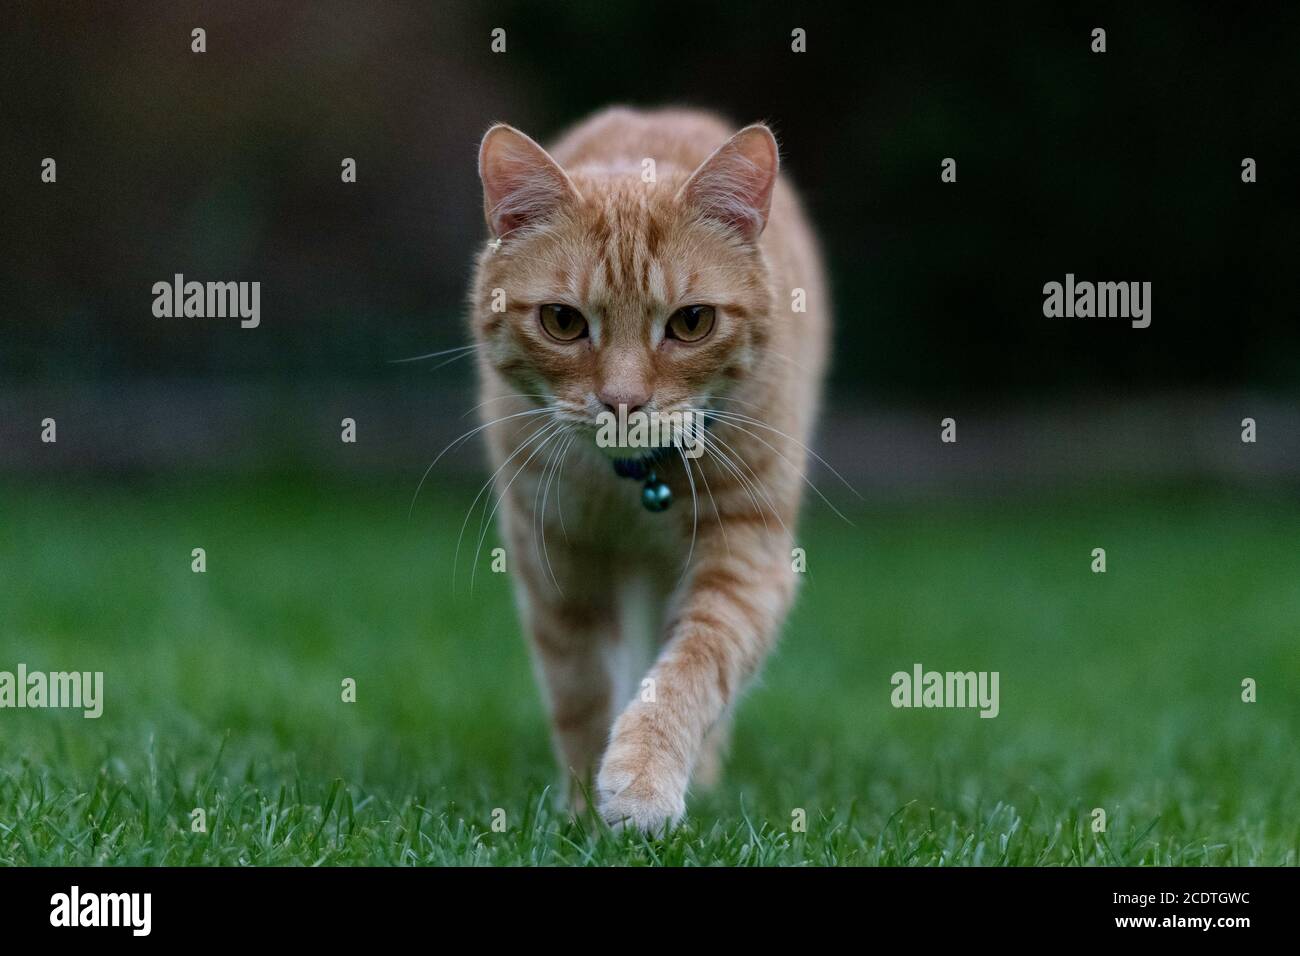 ginger tabby cat walking towards the camera Stock Photo